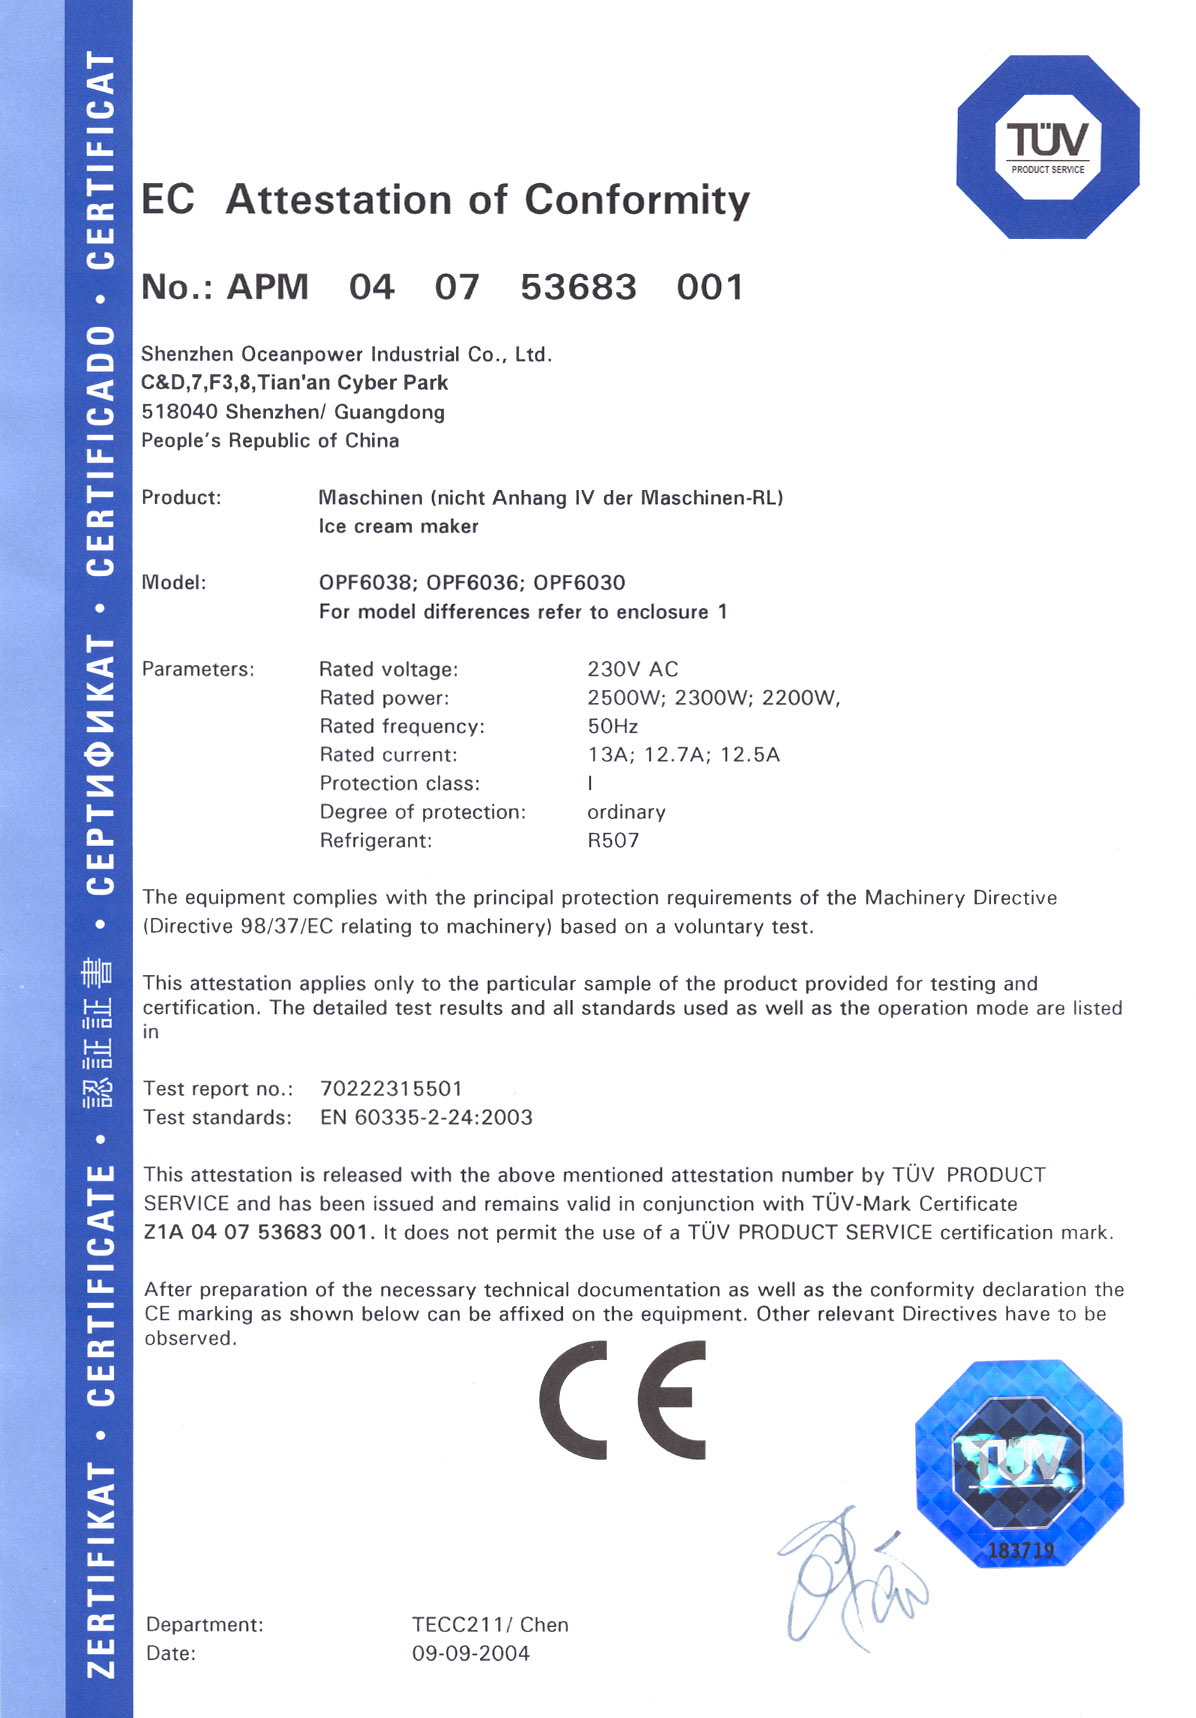 ce认证证书+tuv+2004-09-09